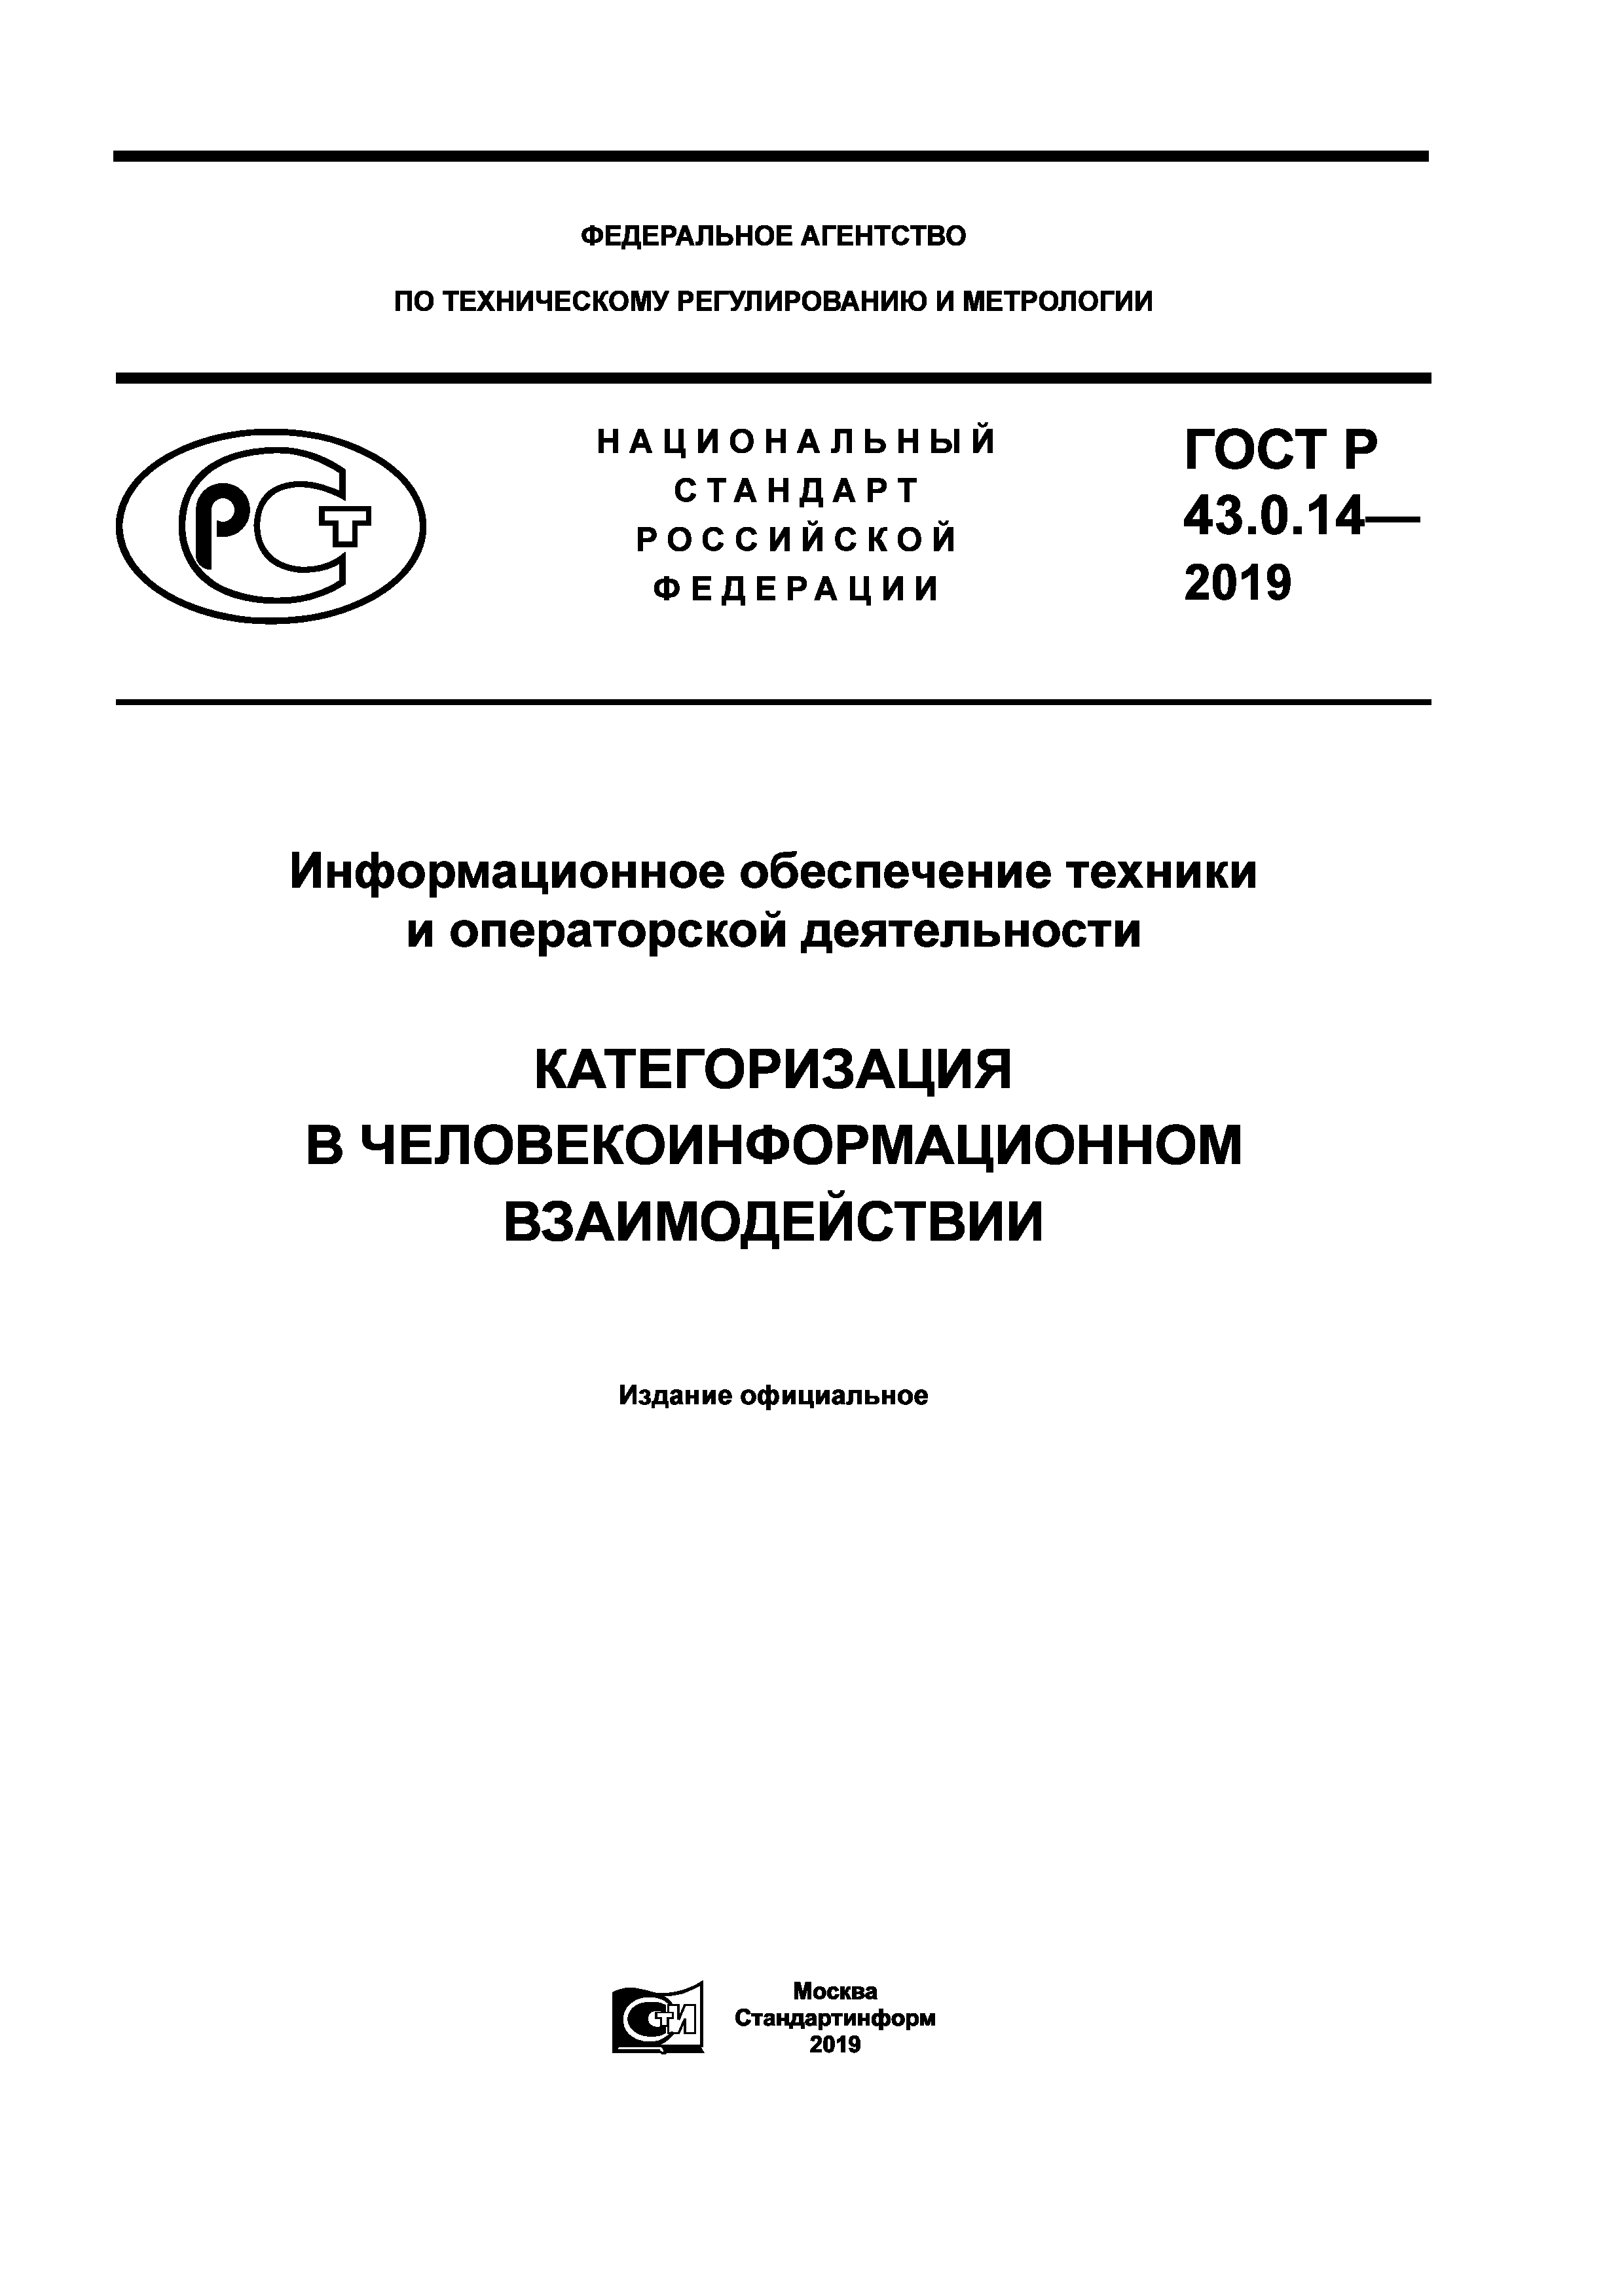 ГОСТ Р 43.0.14-2019